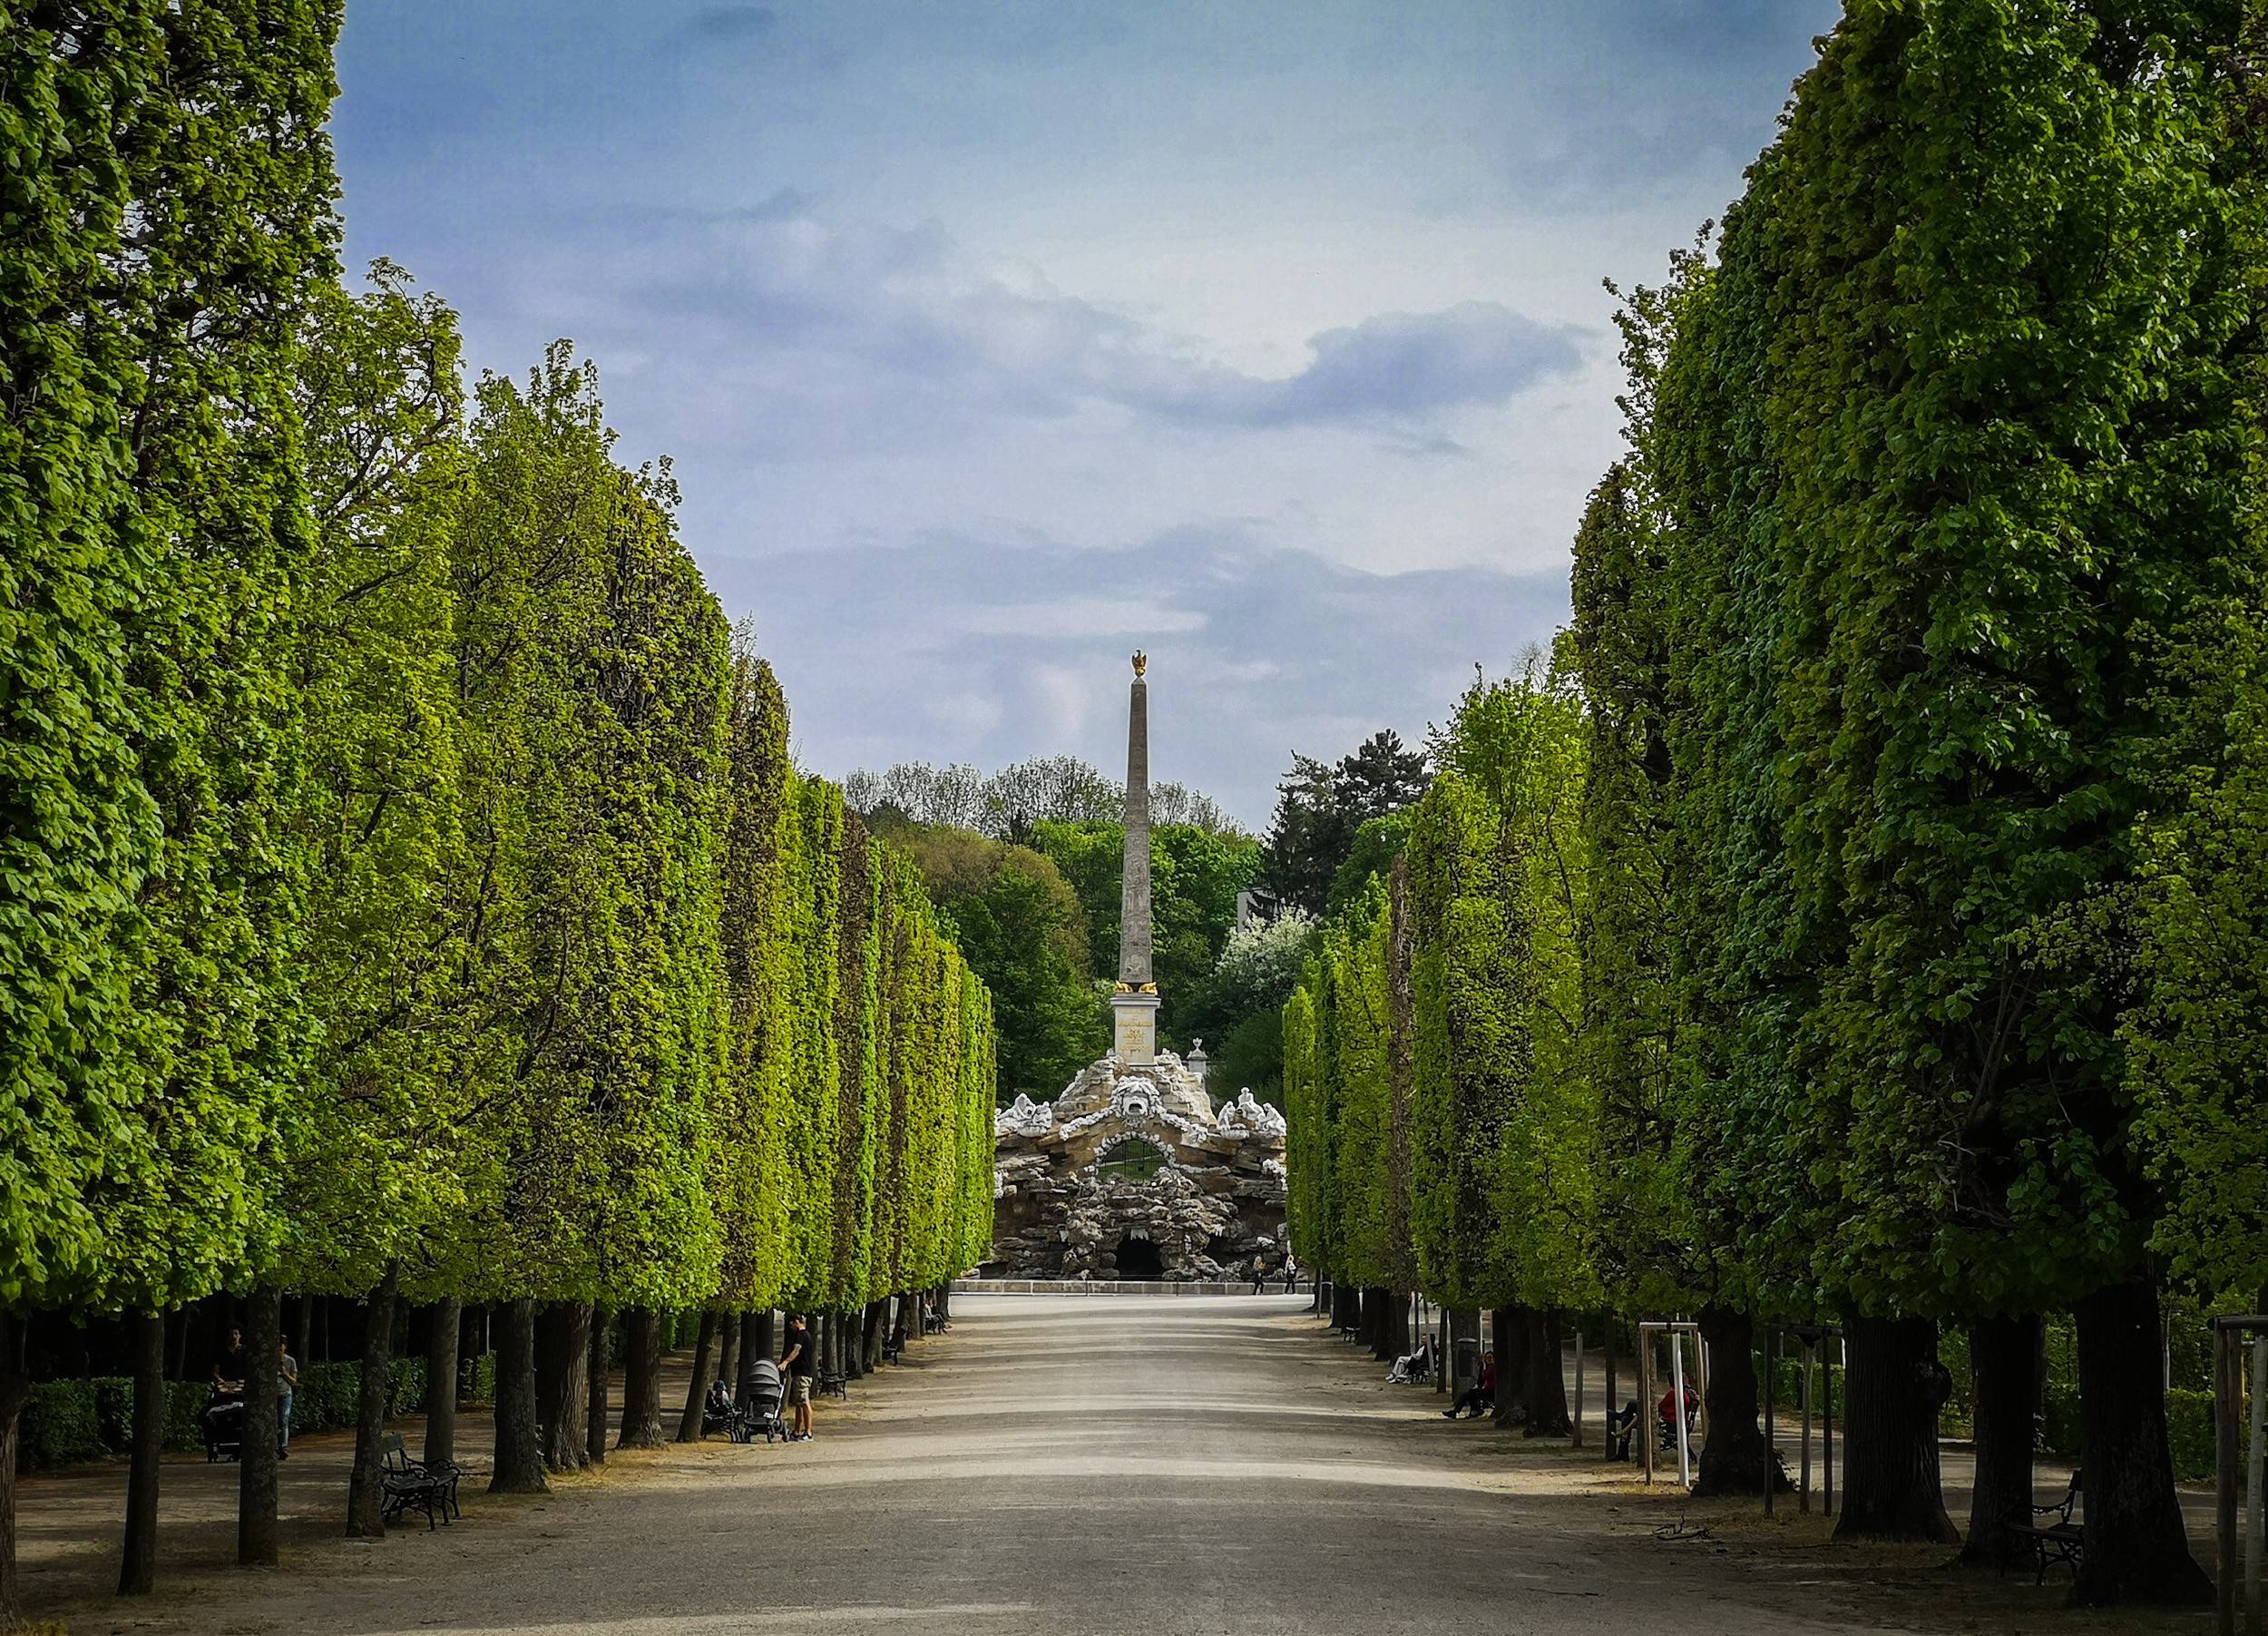 The Obelisk Fountain of Schönbrunn Palace Gardens, Vienna